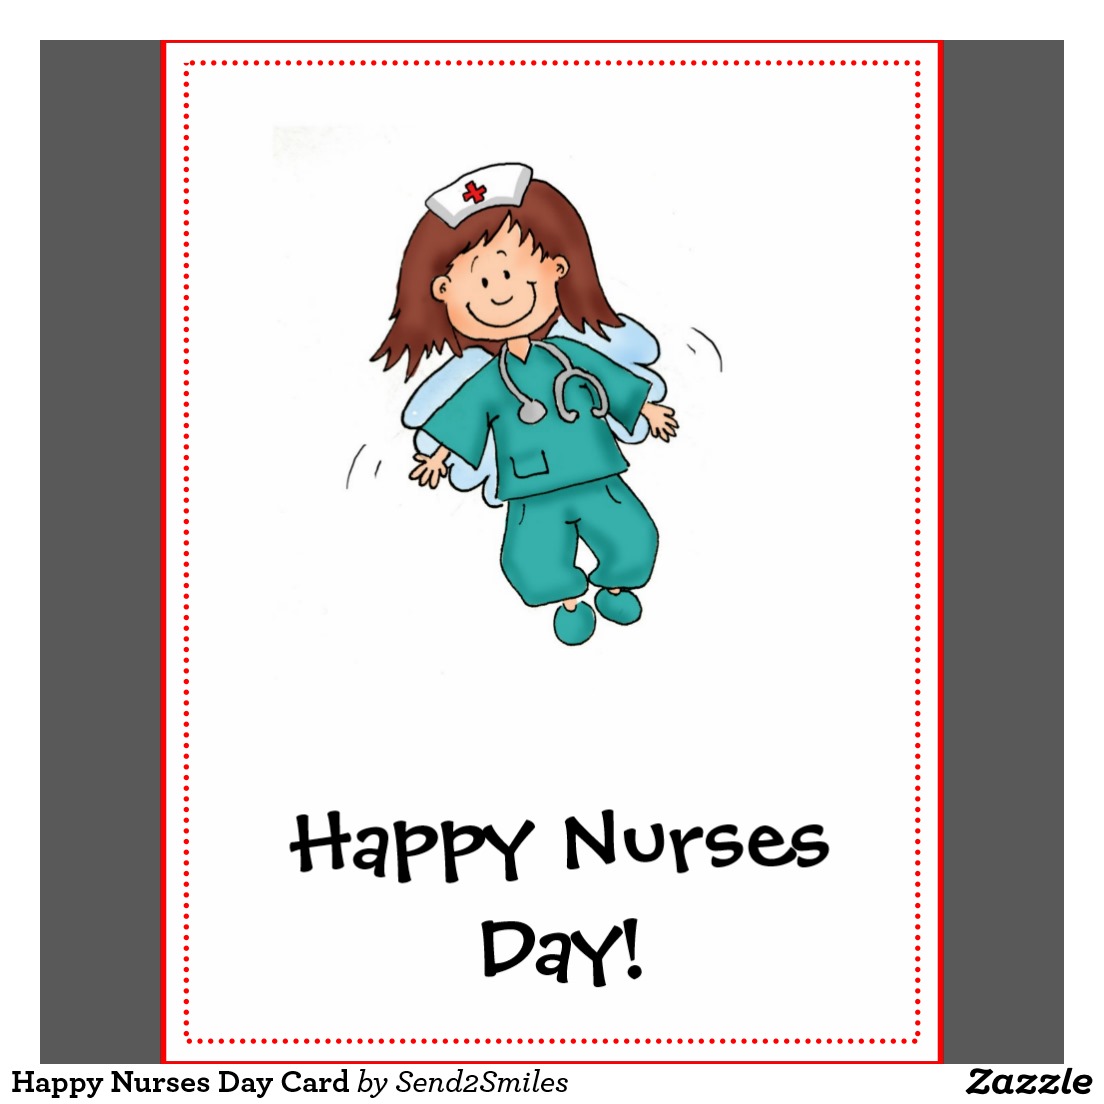 Happy Nurses Day Greeting Card Image.